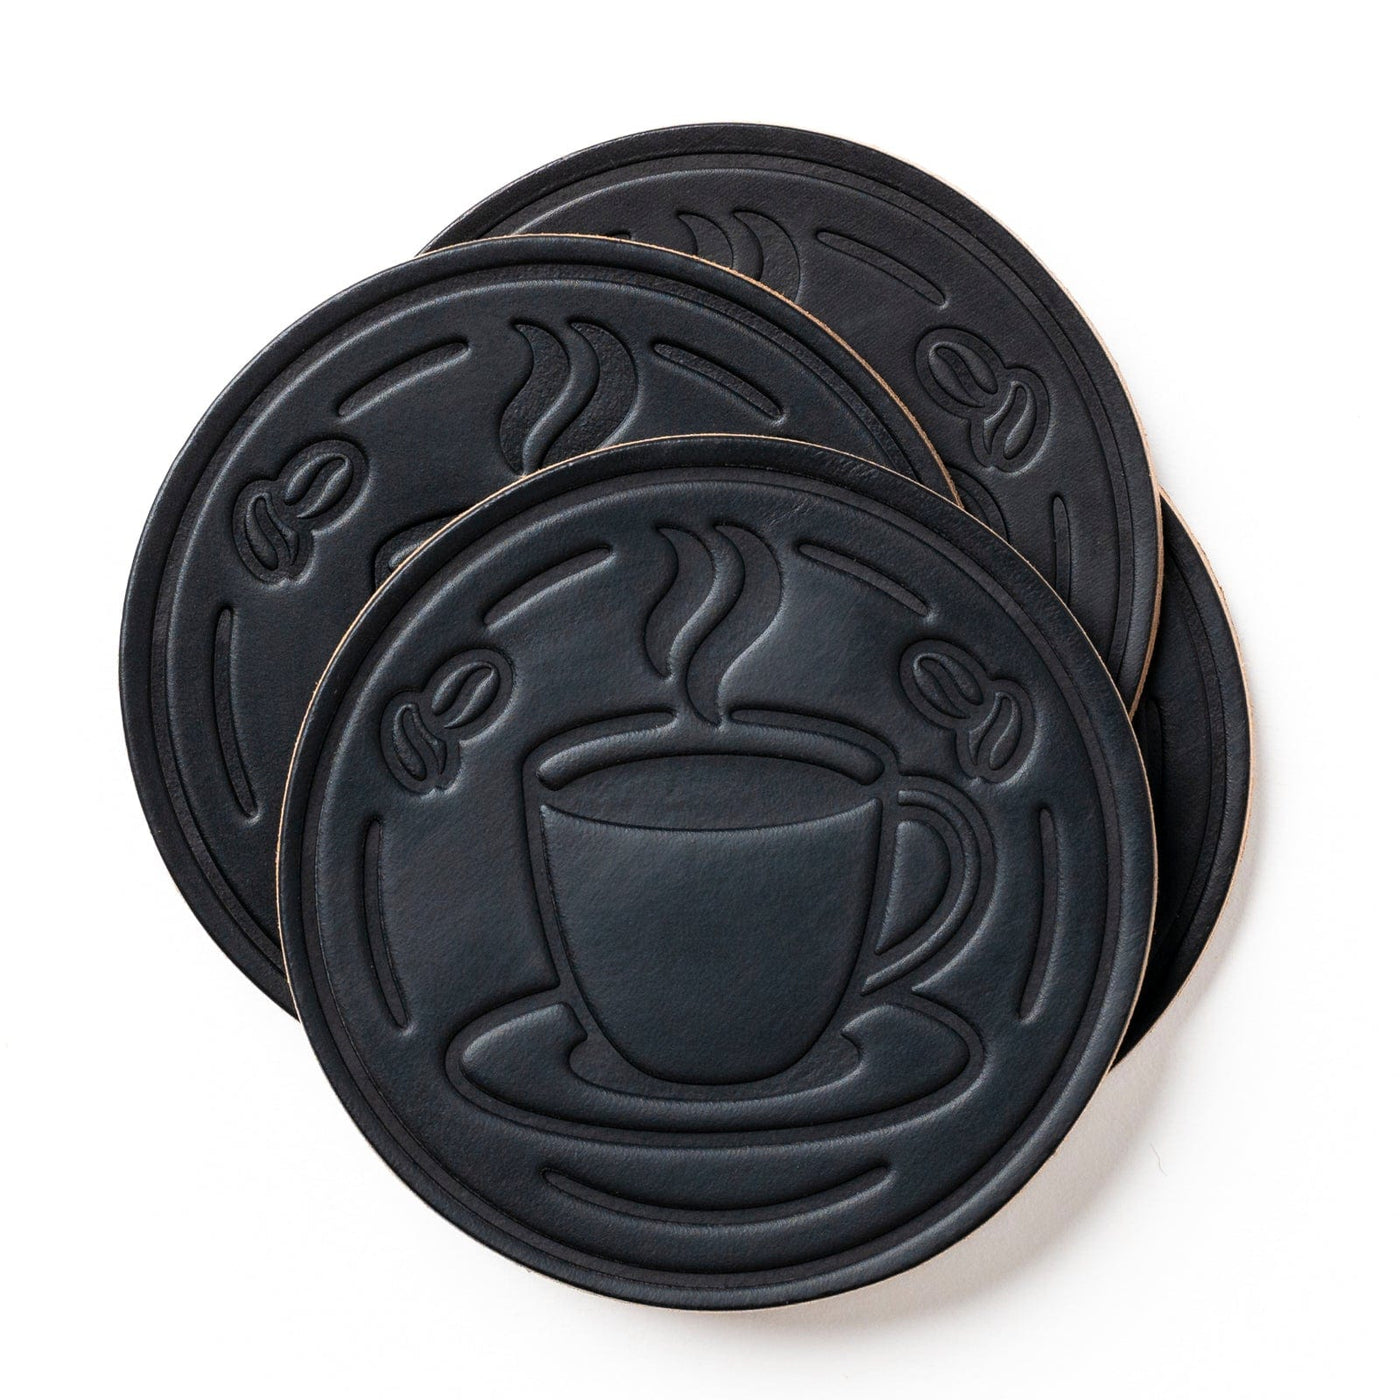 Coffee Coasters - Black - 4 Pack Popov Leather